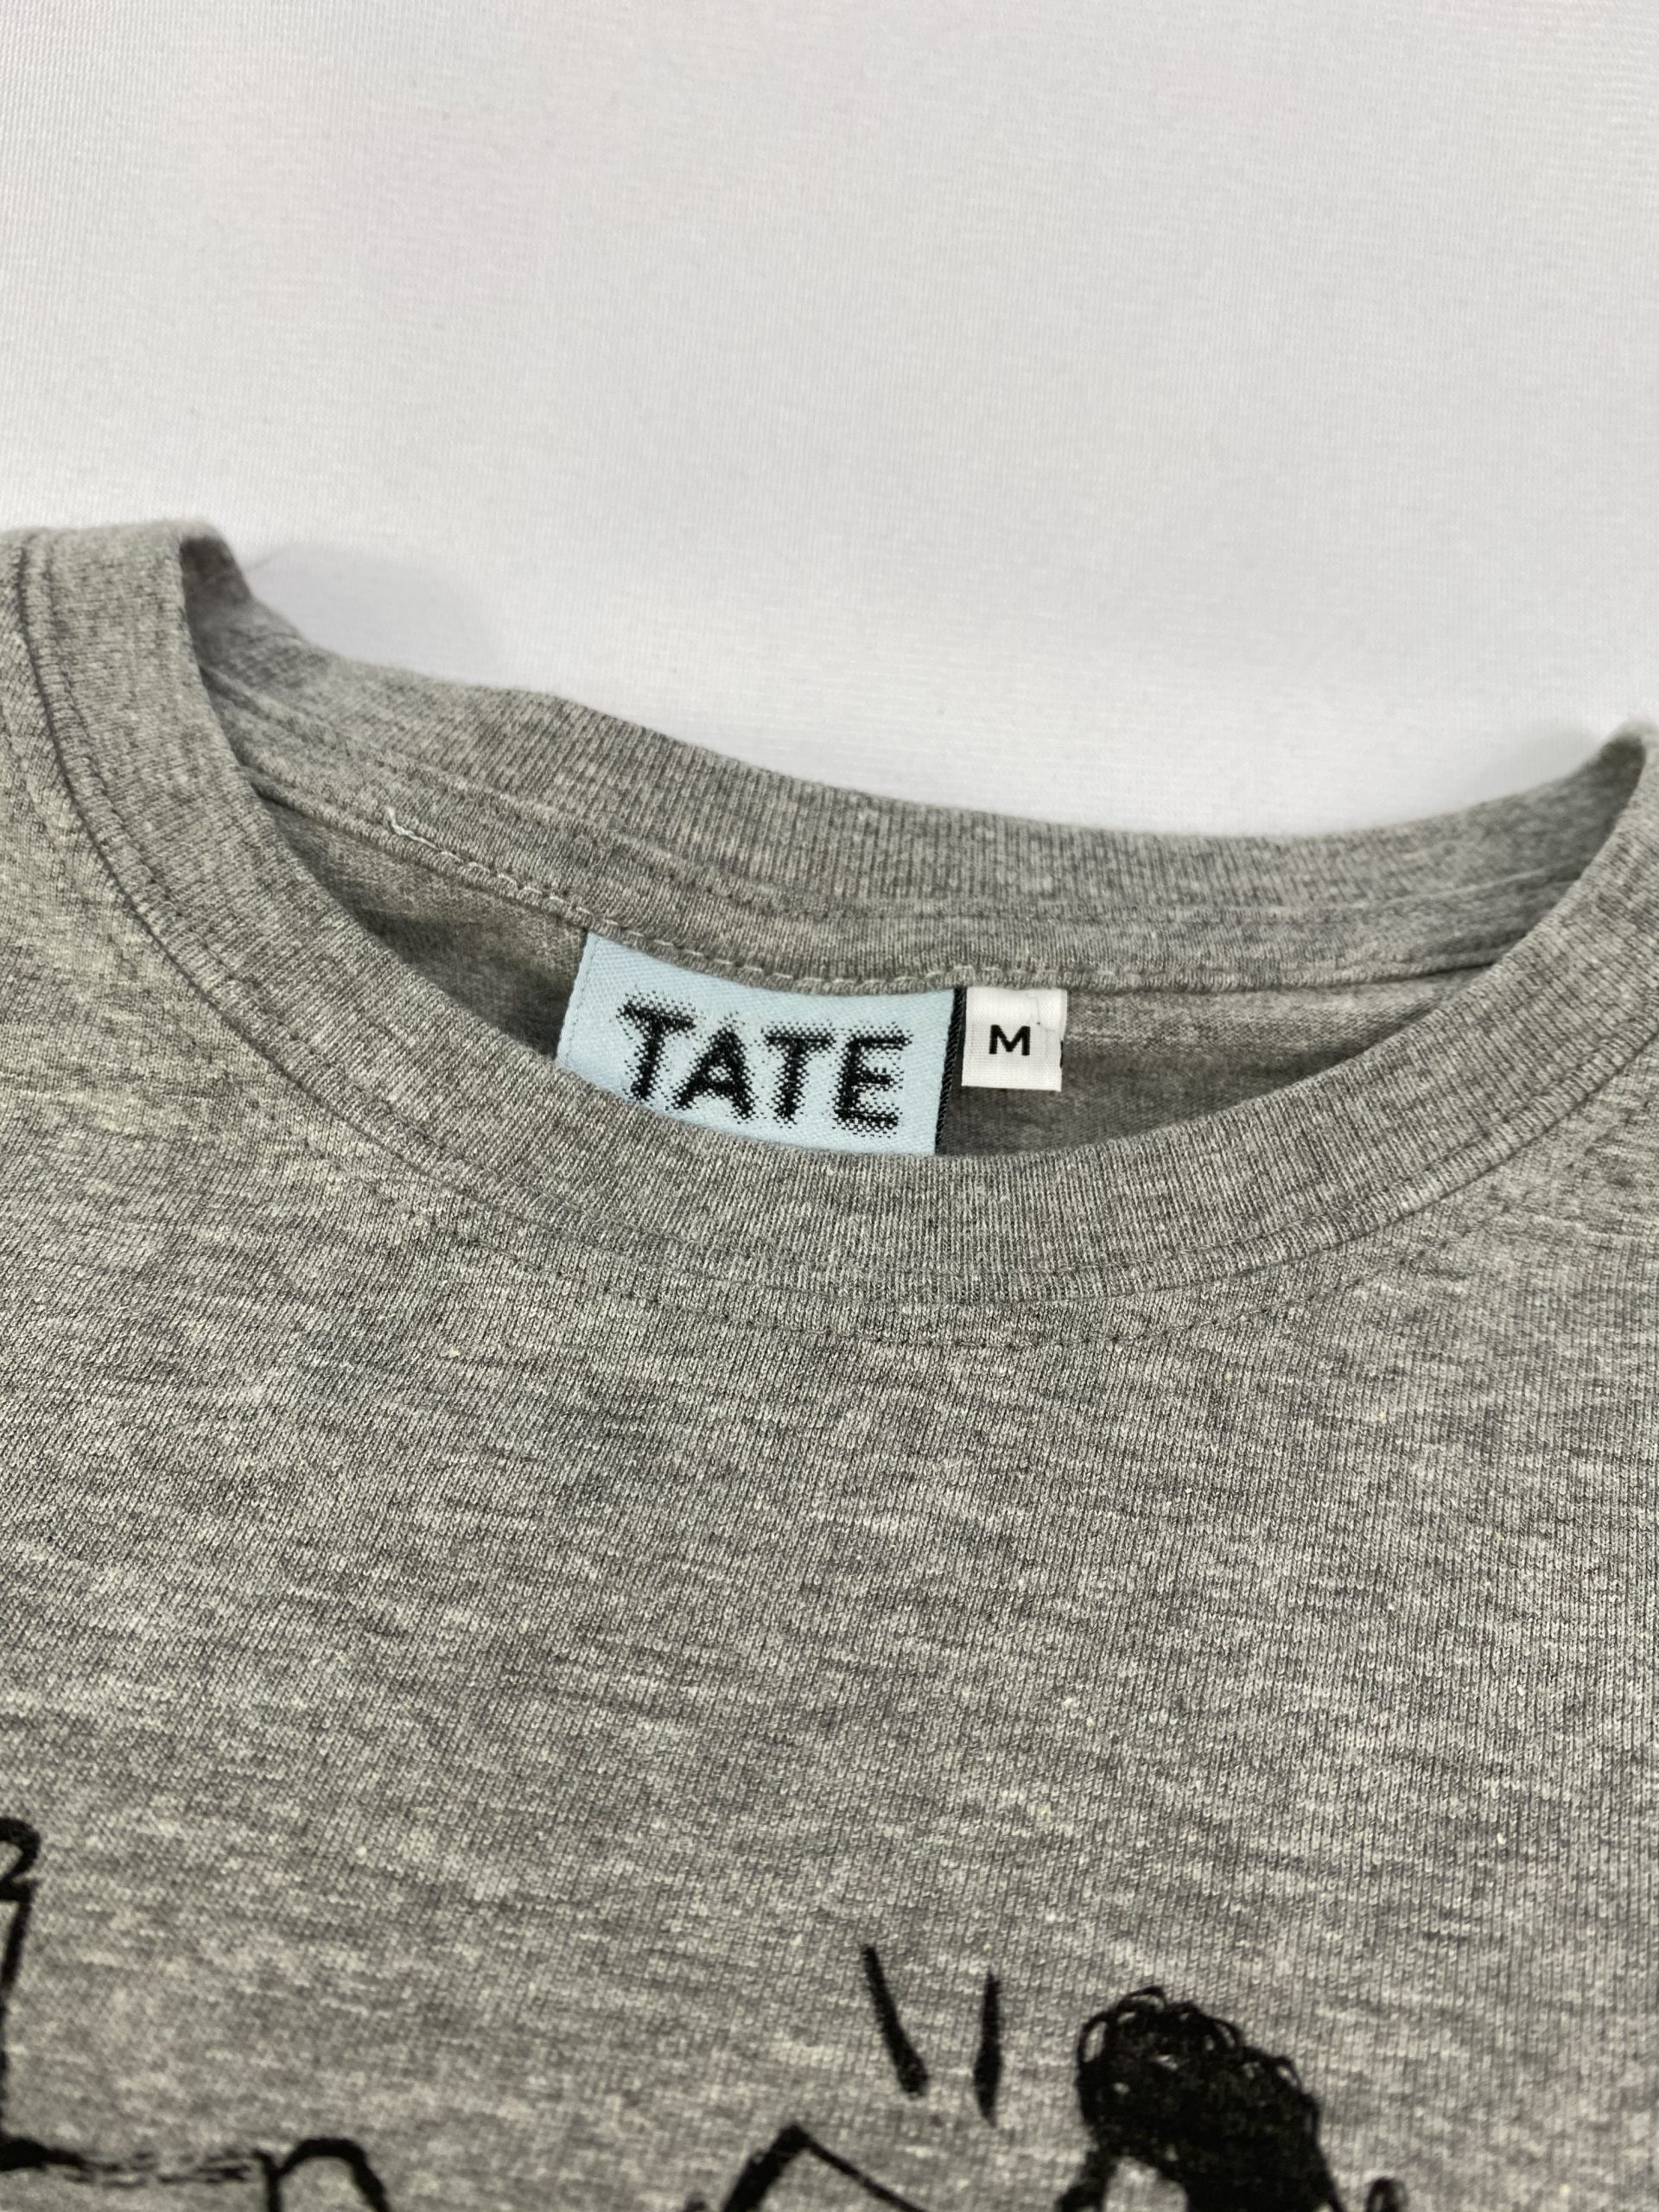 Tate t-shirt print on demand